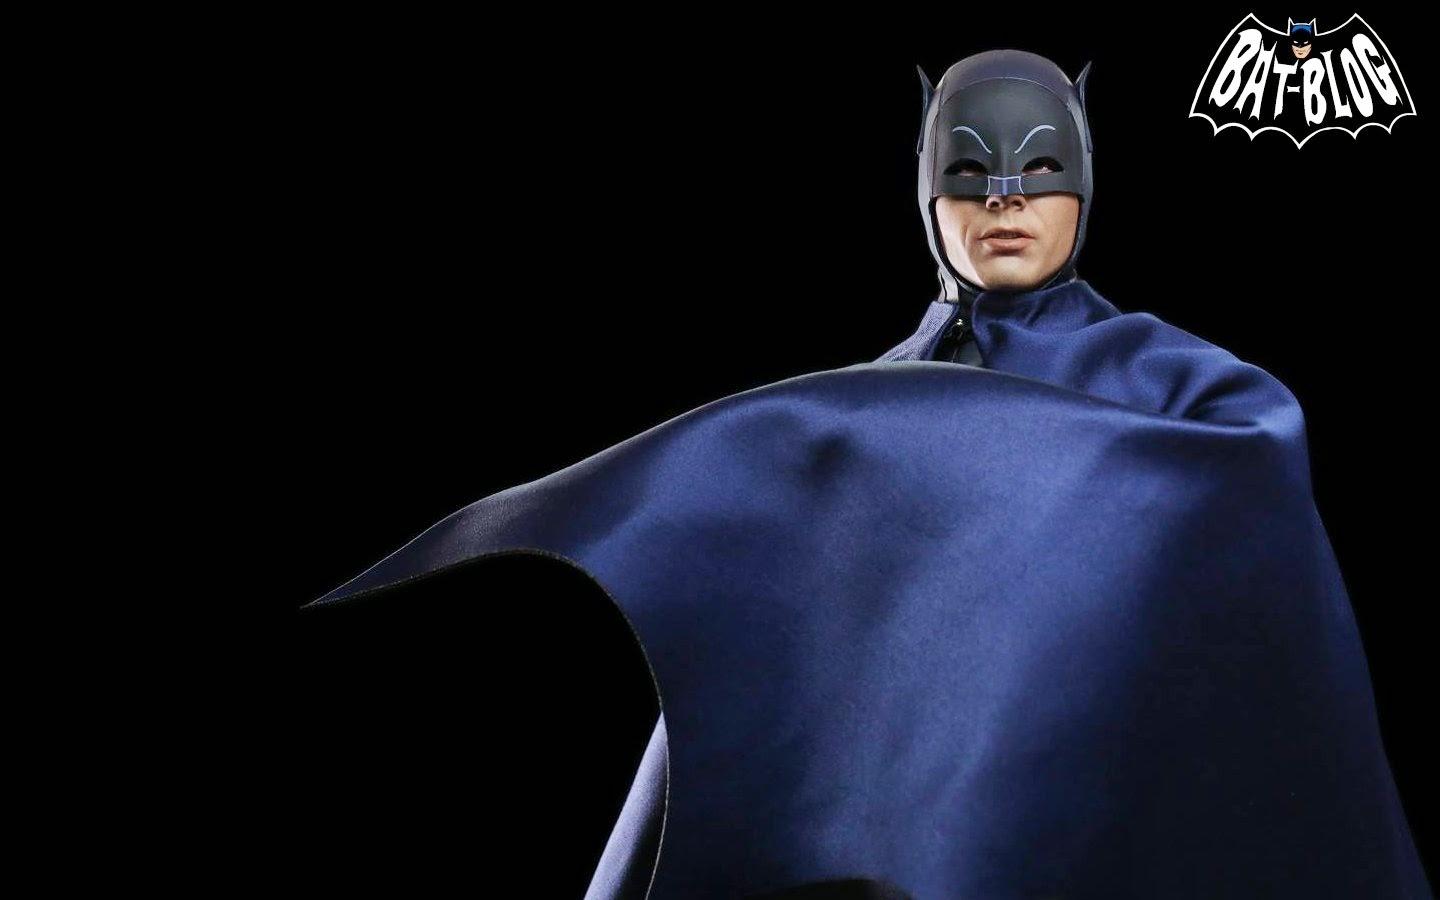 BATMAN WALLPAPERS Based on the HOT TOYS 1966 Adam West Figure About Batman